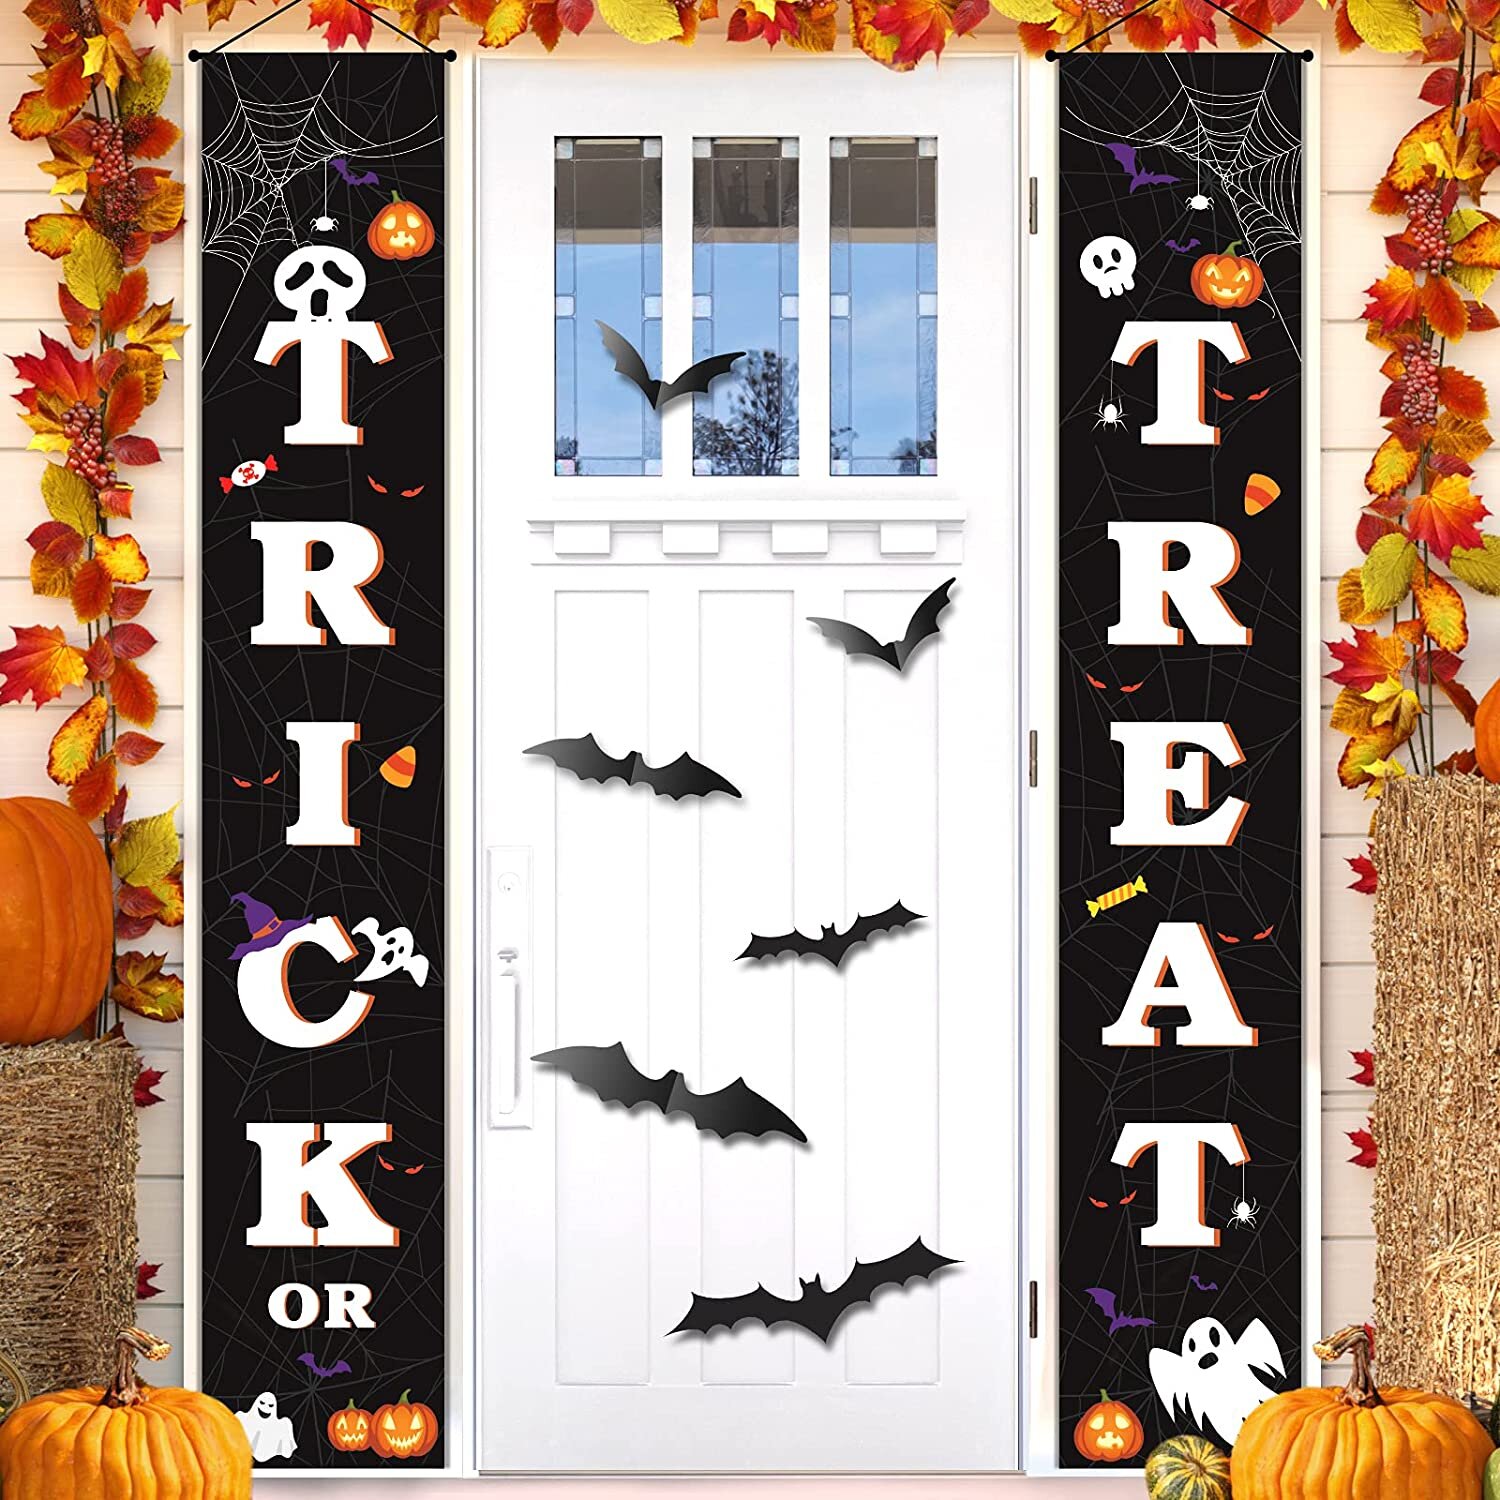 Trick or Treat Green Spider/Bat or Orange Ghost Door Cover Halloween Decoration